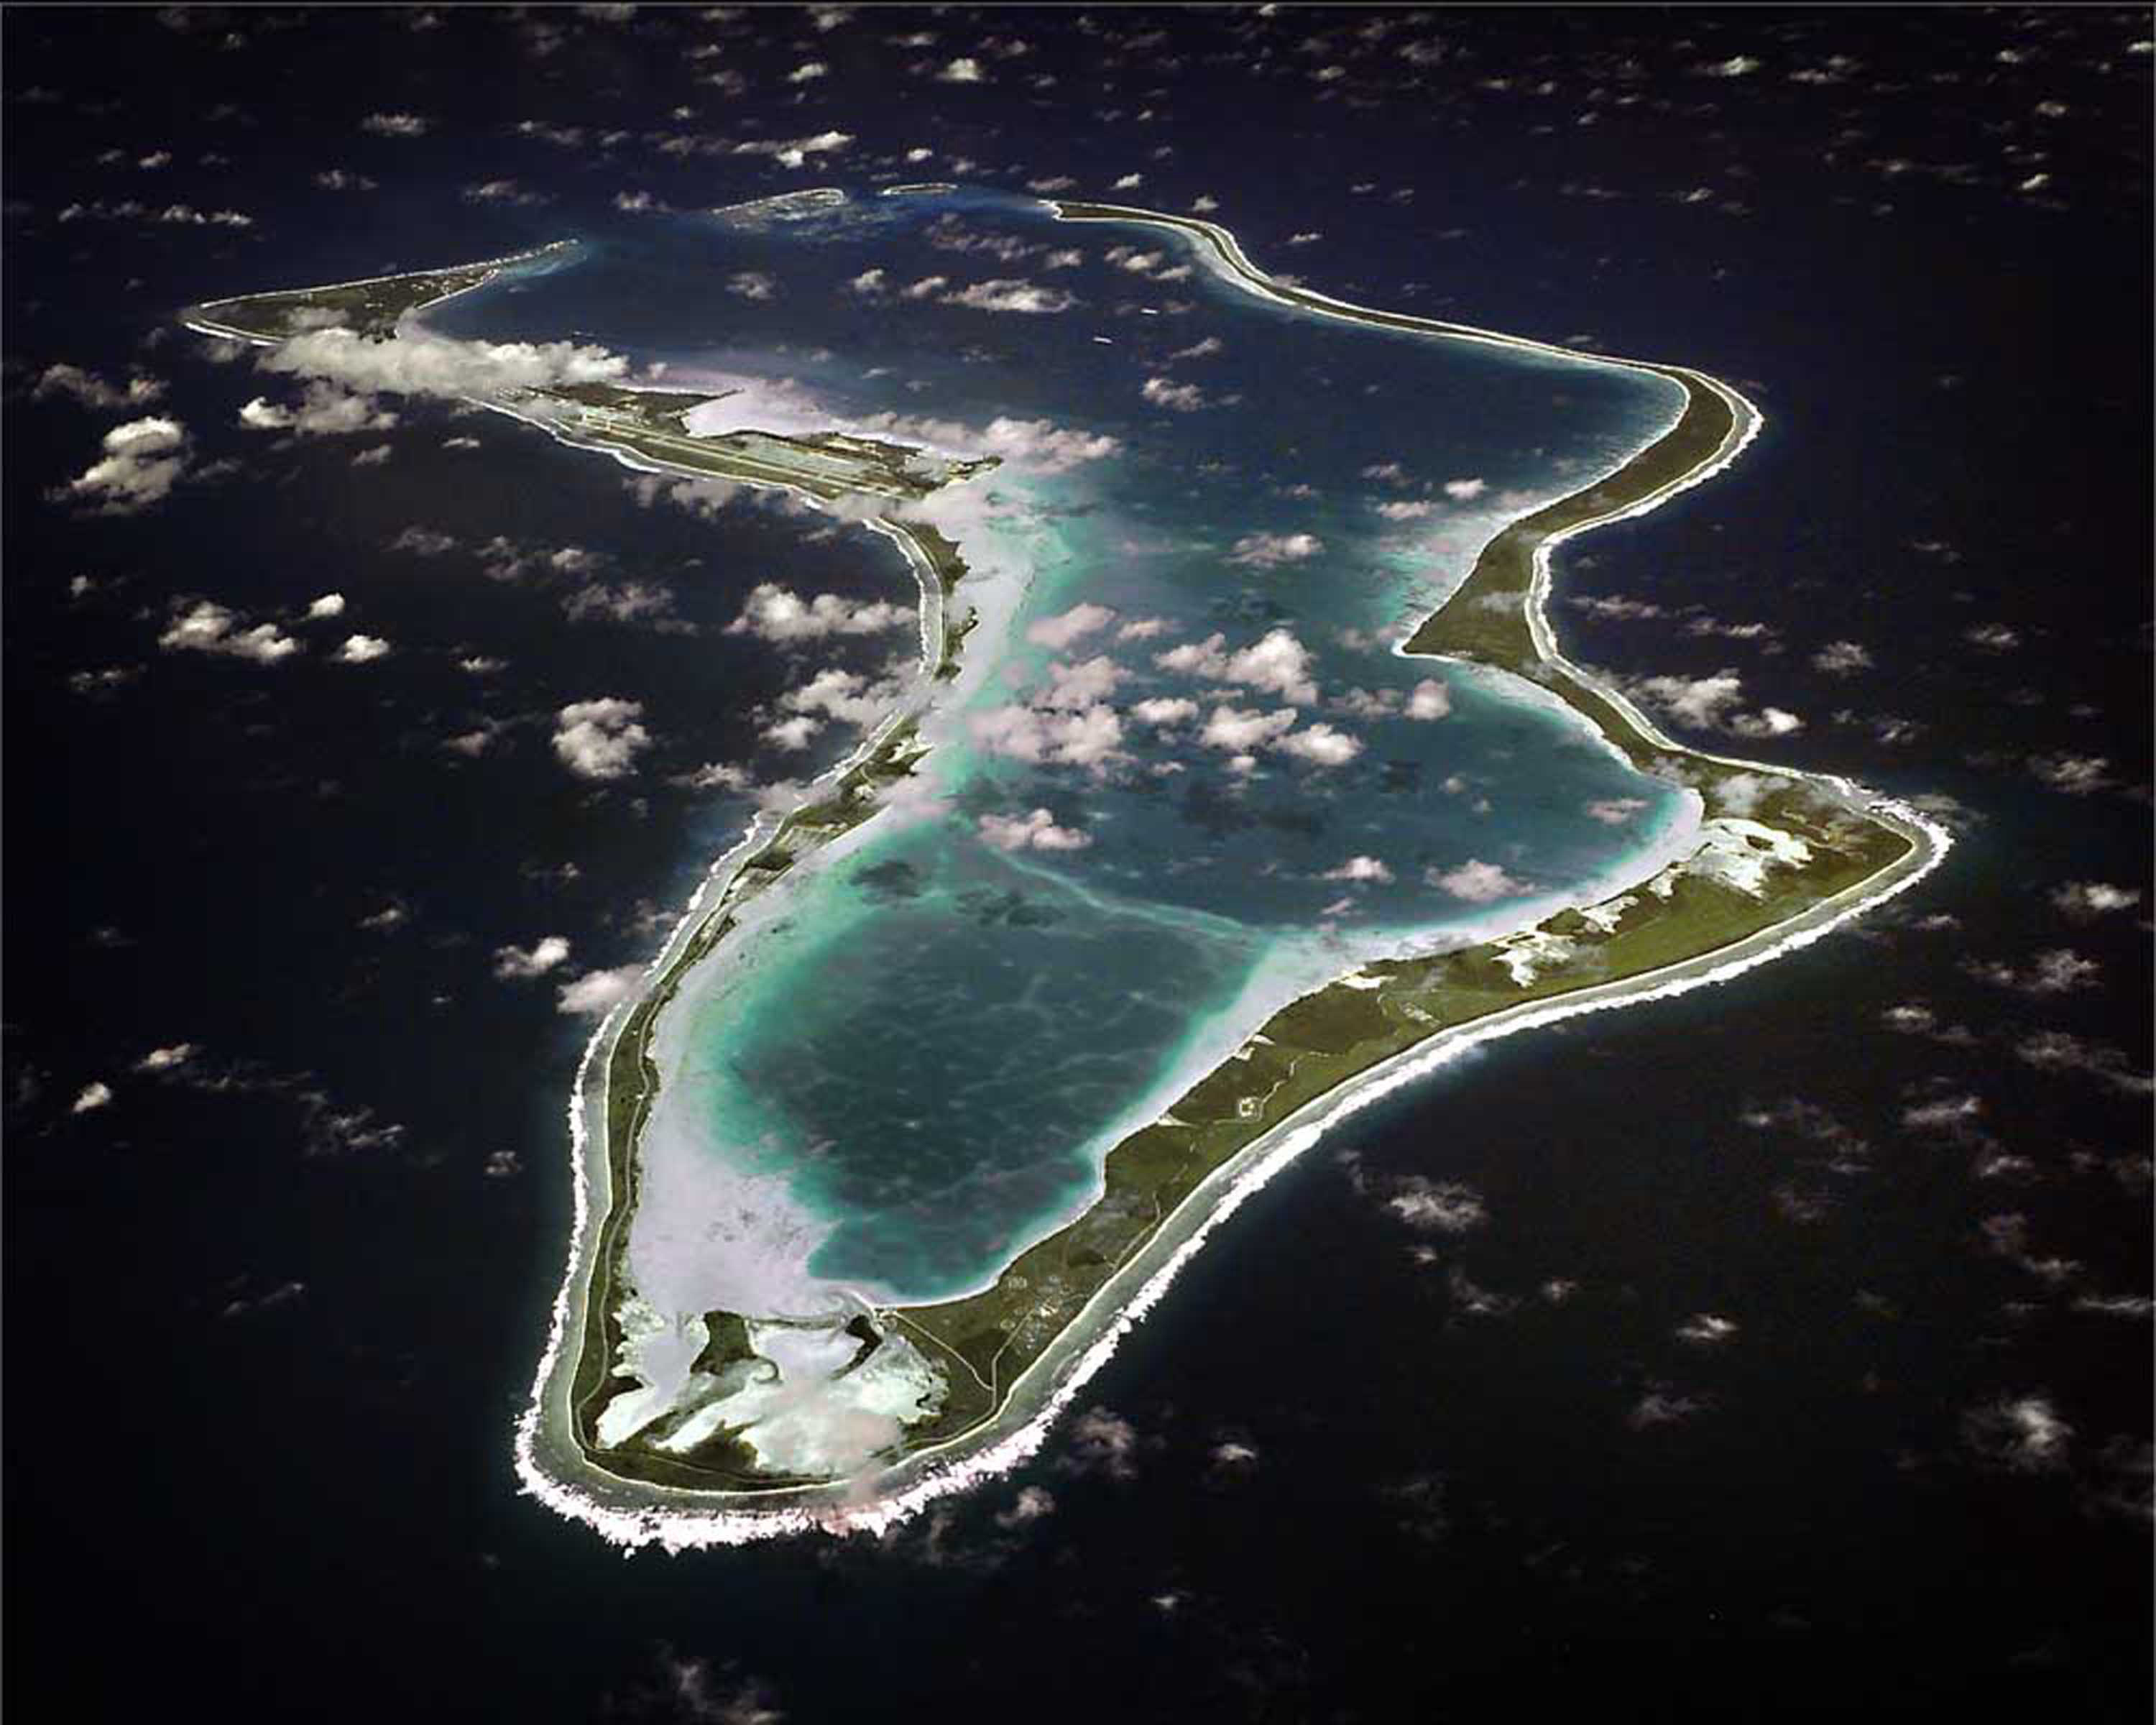 Diego Garcia aerial view in 2013